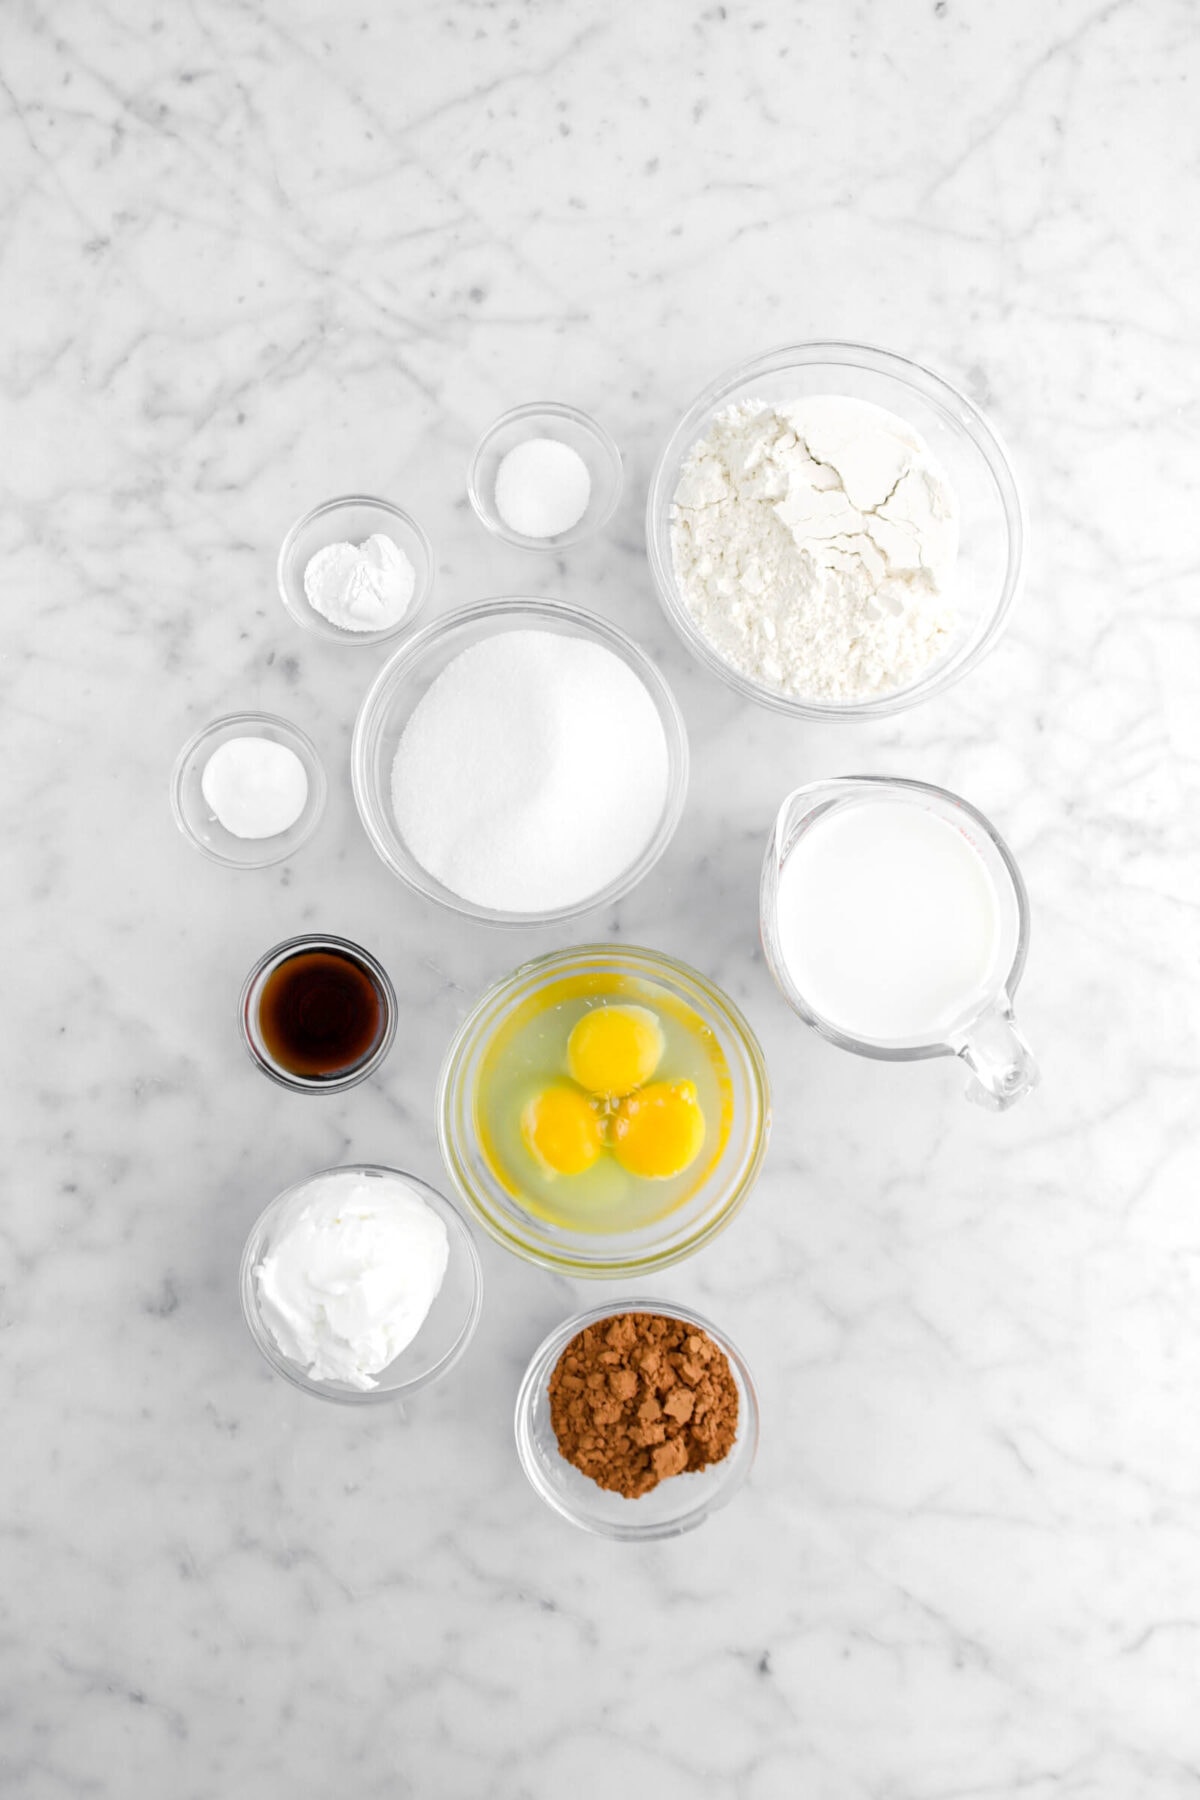 flour, salt, baking powder, baking soda, sugar, milk, eggs, vanilla, shortening, and cocoa powder